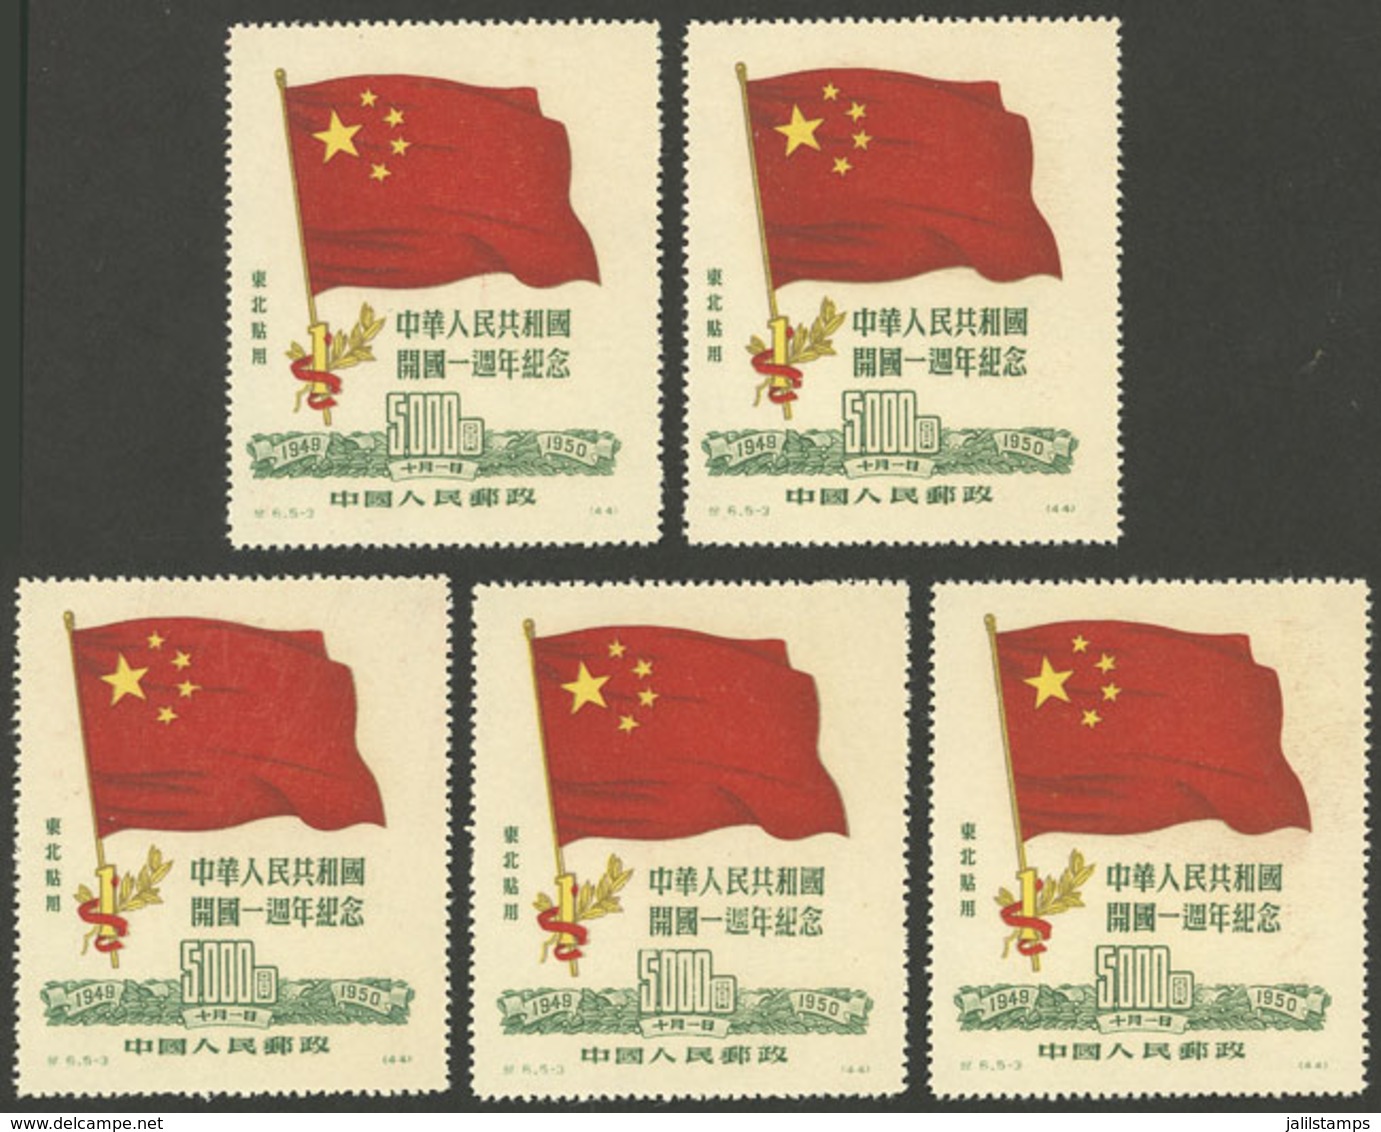 NORTHEAST CHINA: Sc.1L159, 5 MNH Examples, Probably Reprints, Excellent Quality! - Cina Del Nord-Est 1946-48